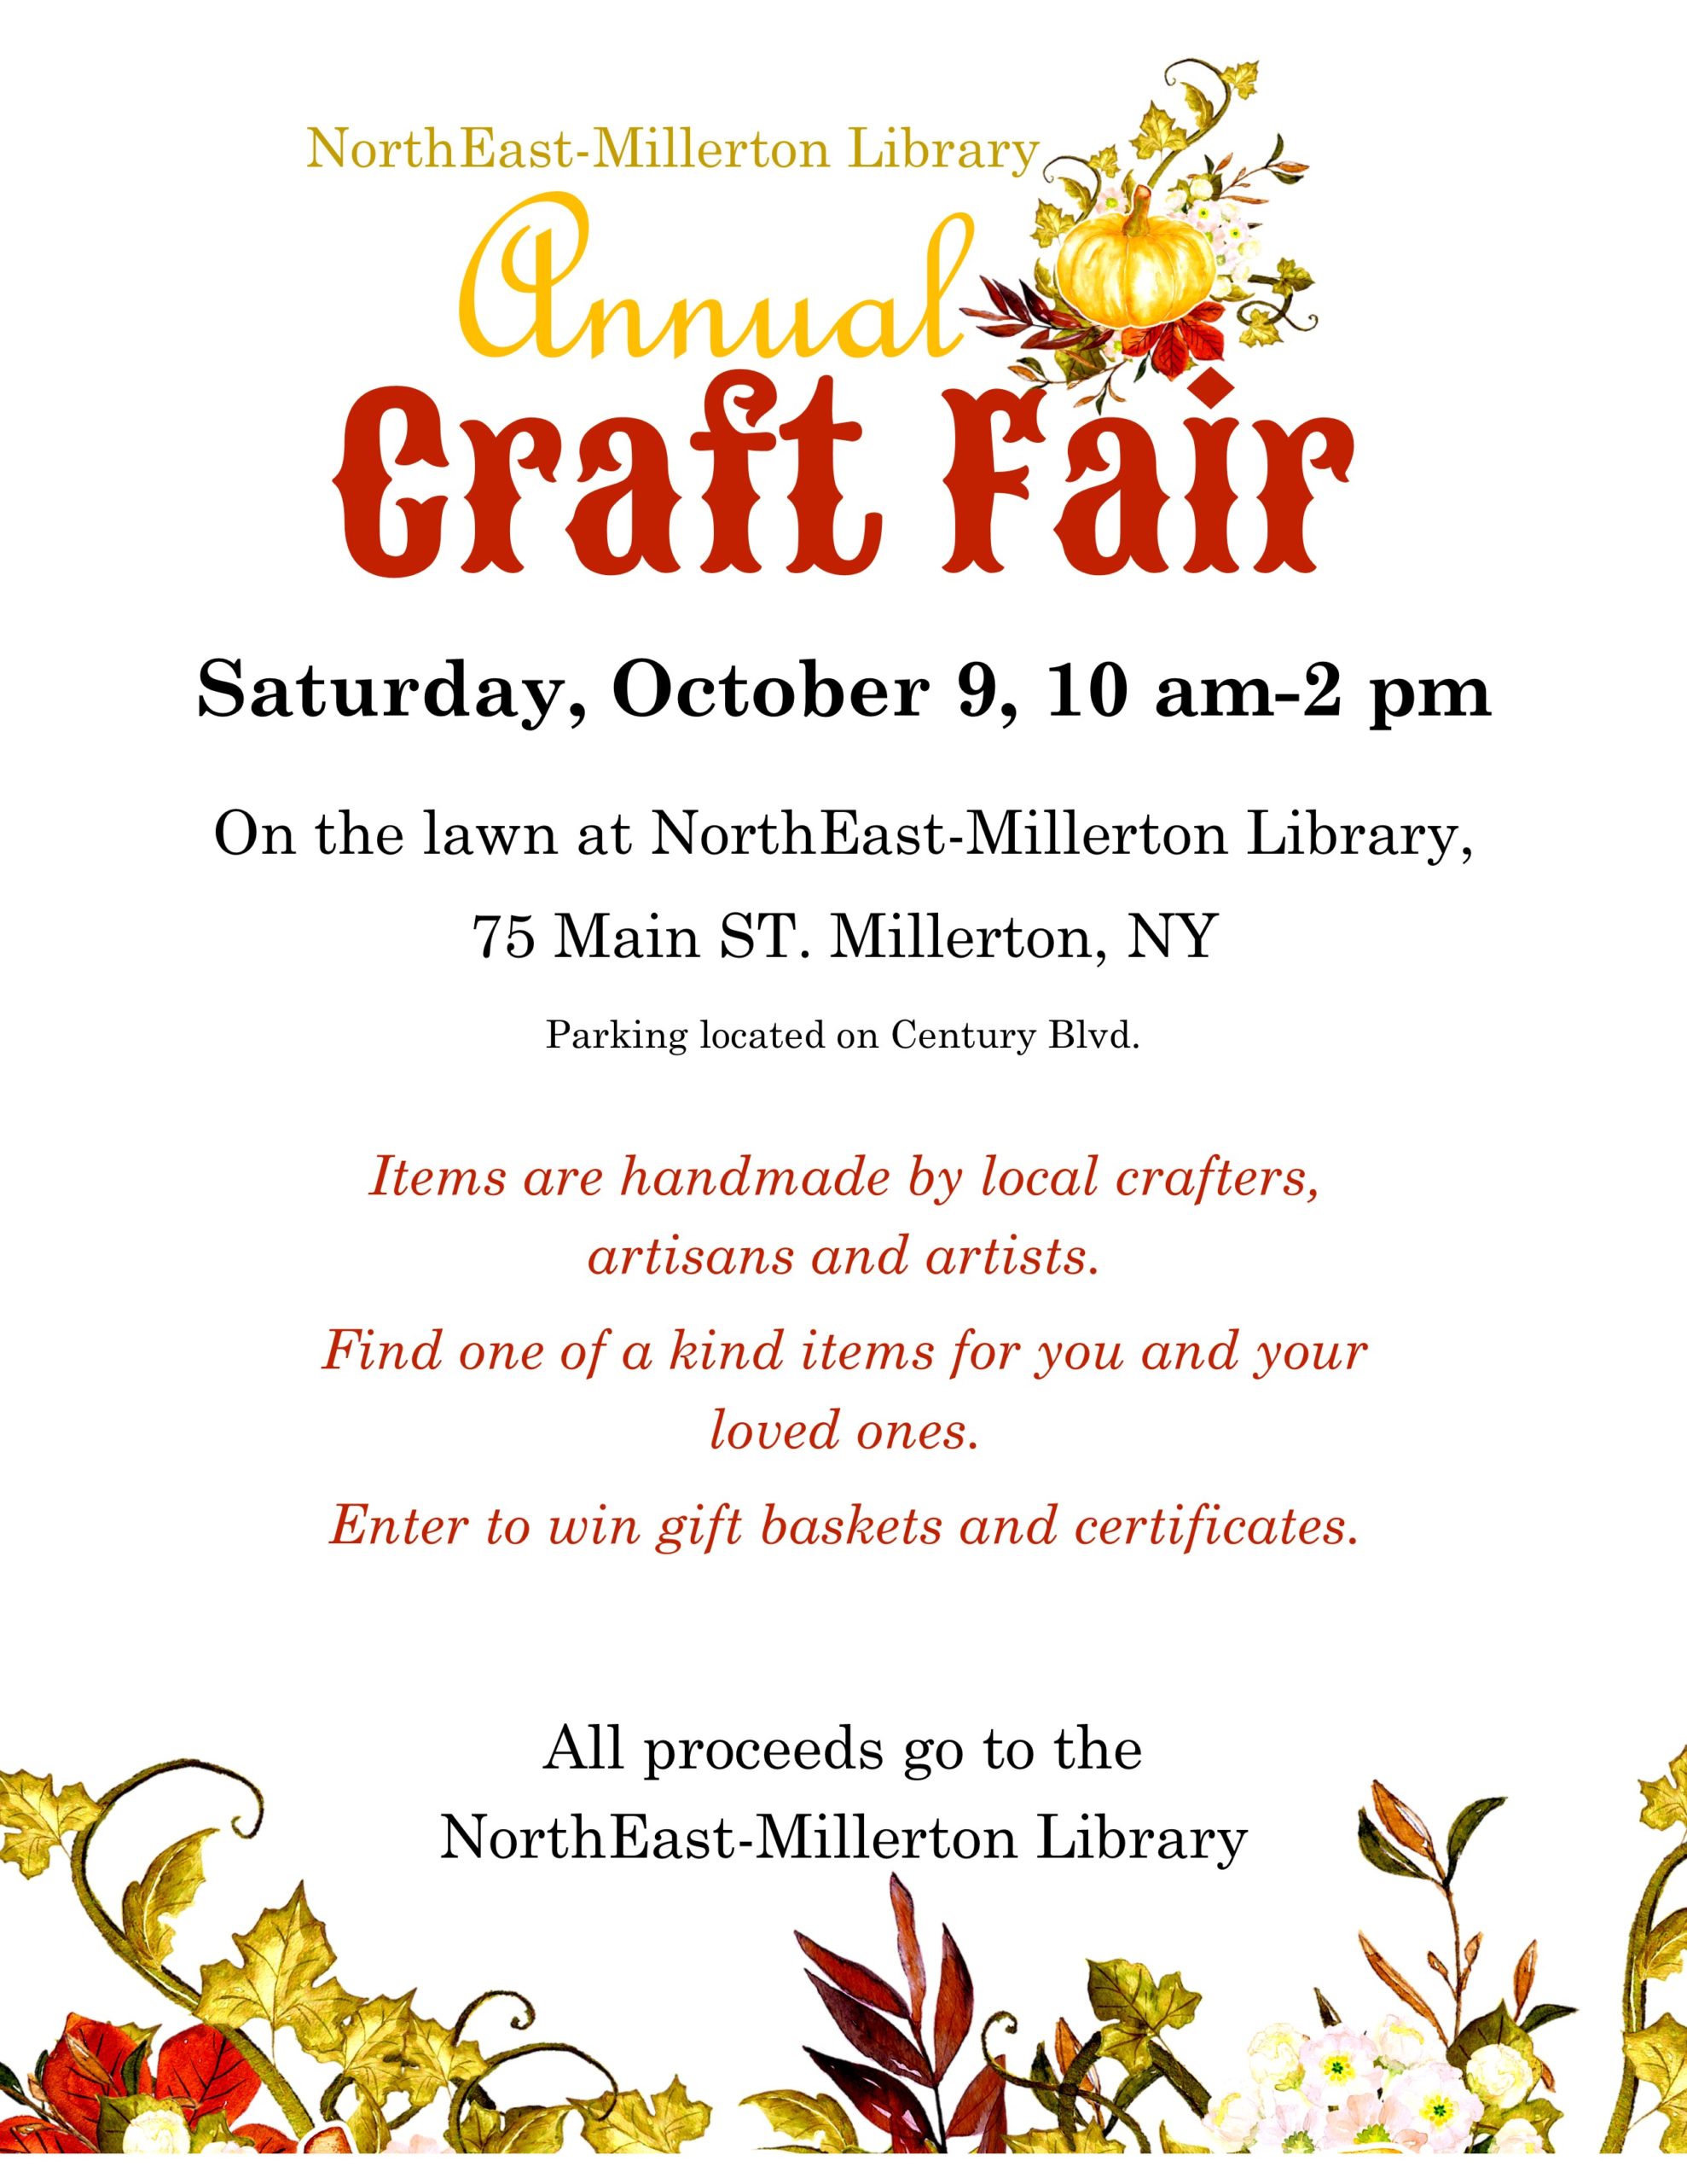 Annual Craft Fair Oct 9 10 am to 2 pm